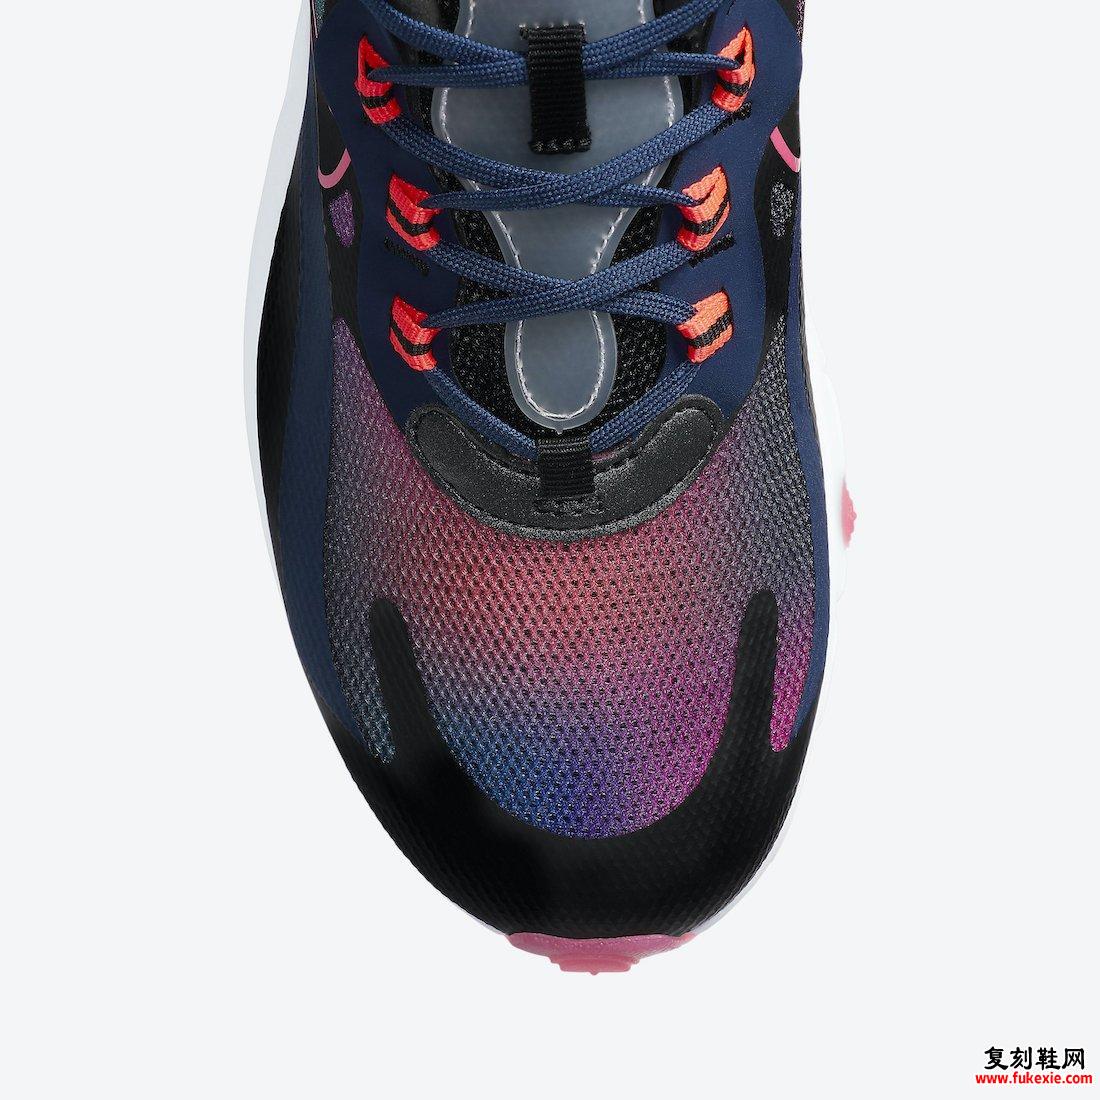 Nike Air Max 270 React SE海军蓝绯红色CK6929-400发售日期